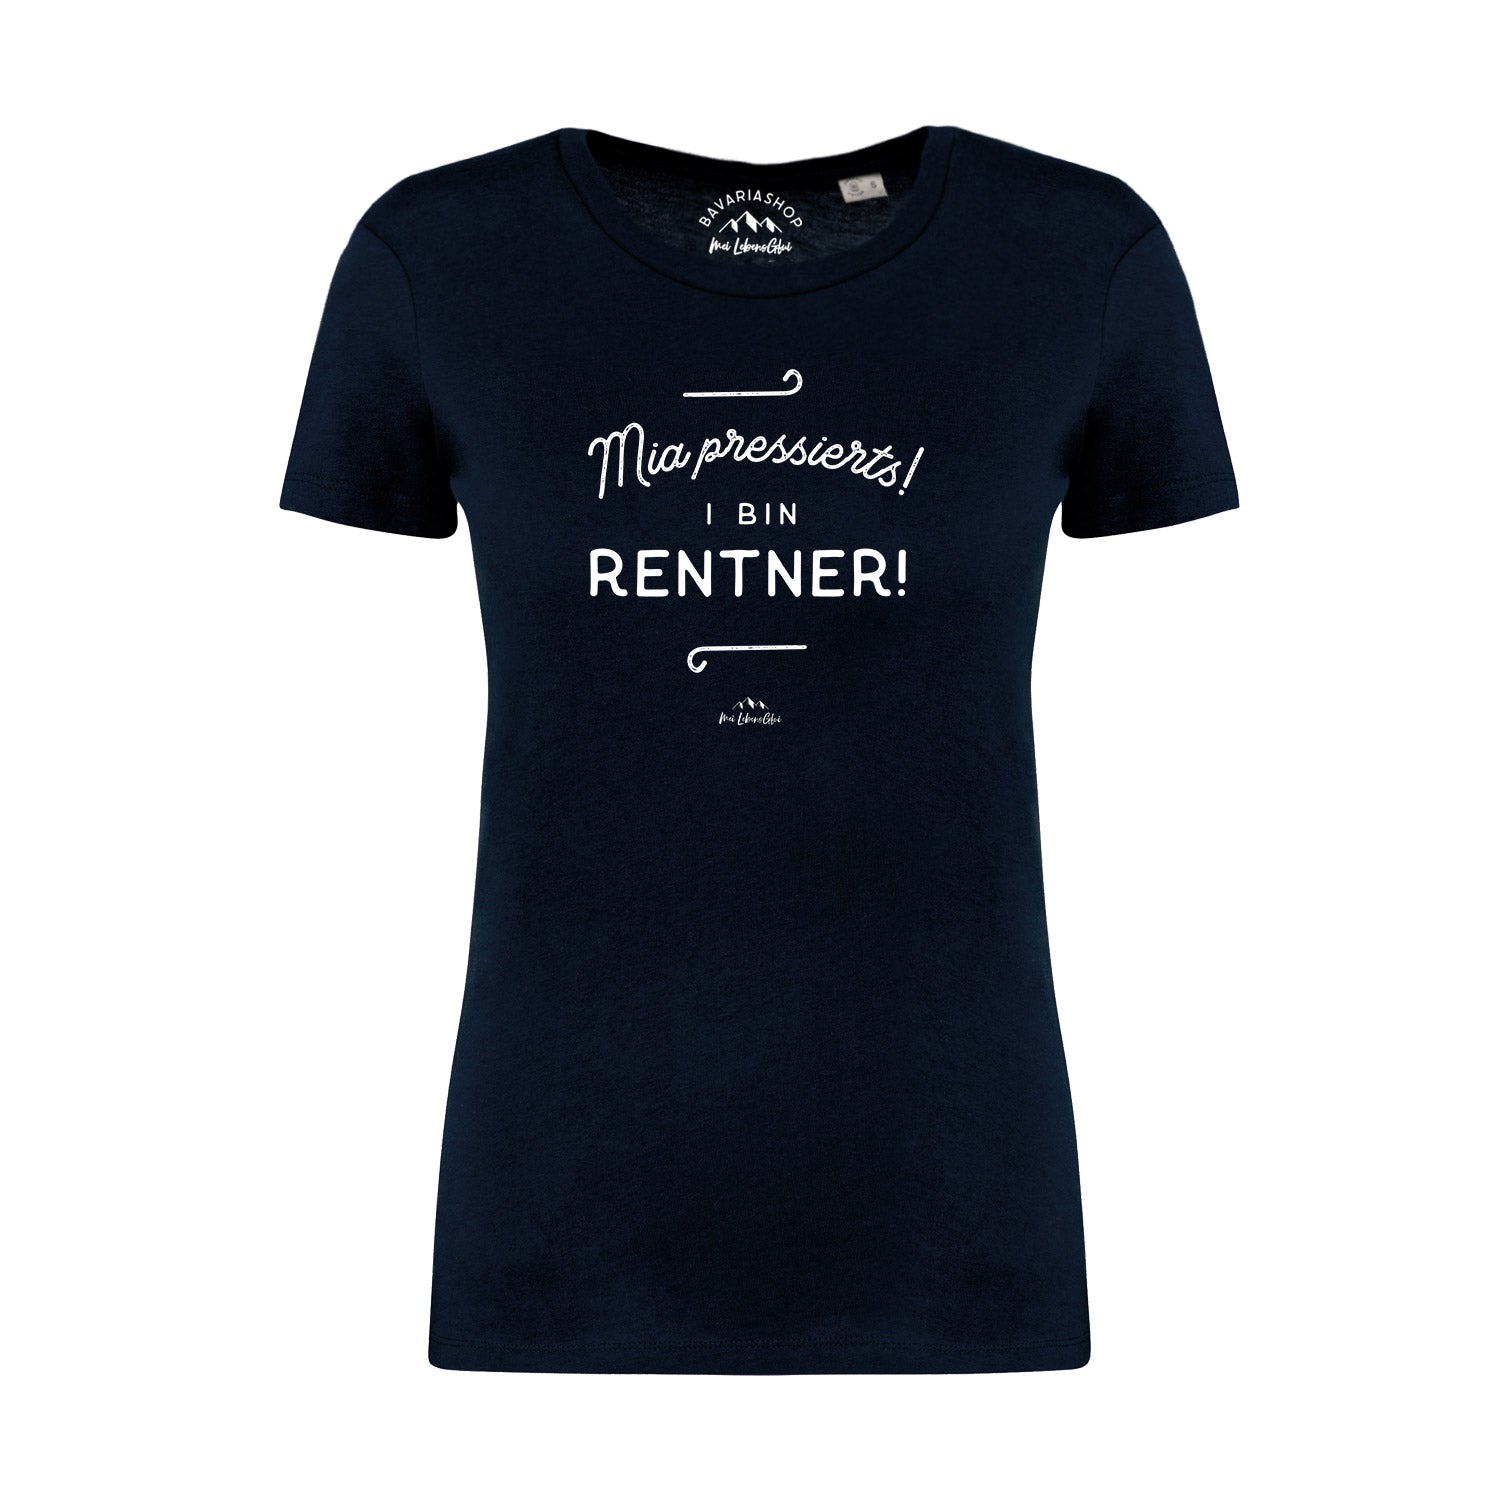 Damen T-Shirt "Mia pressierts, i bin Rentner"